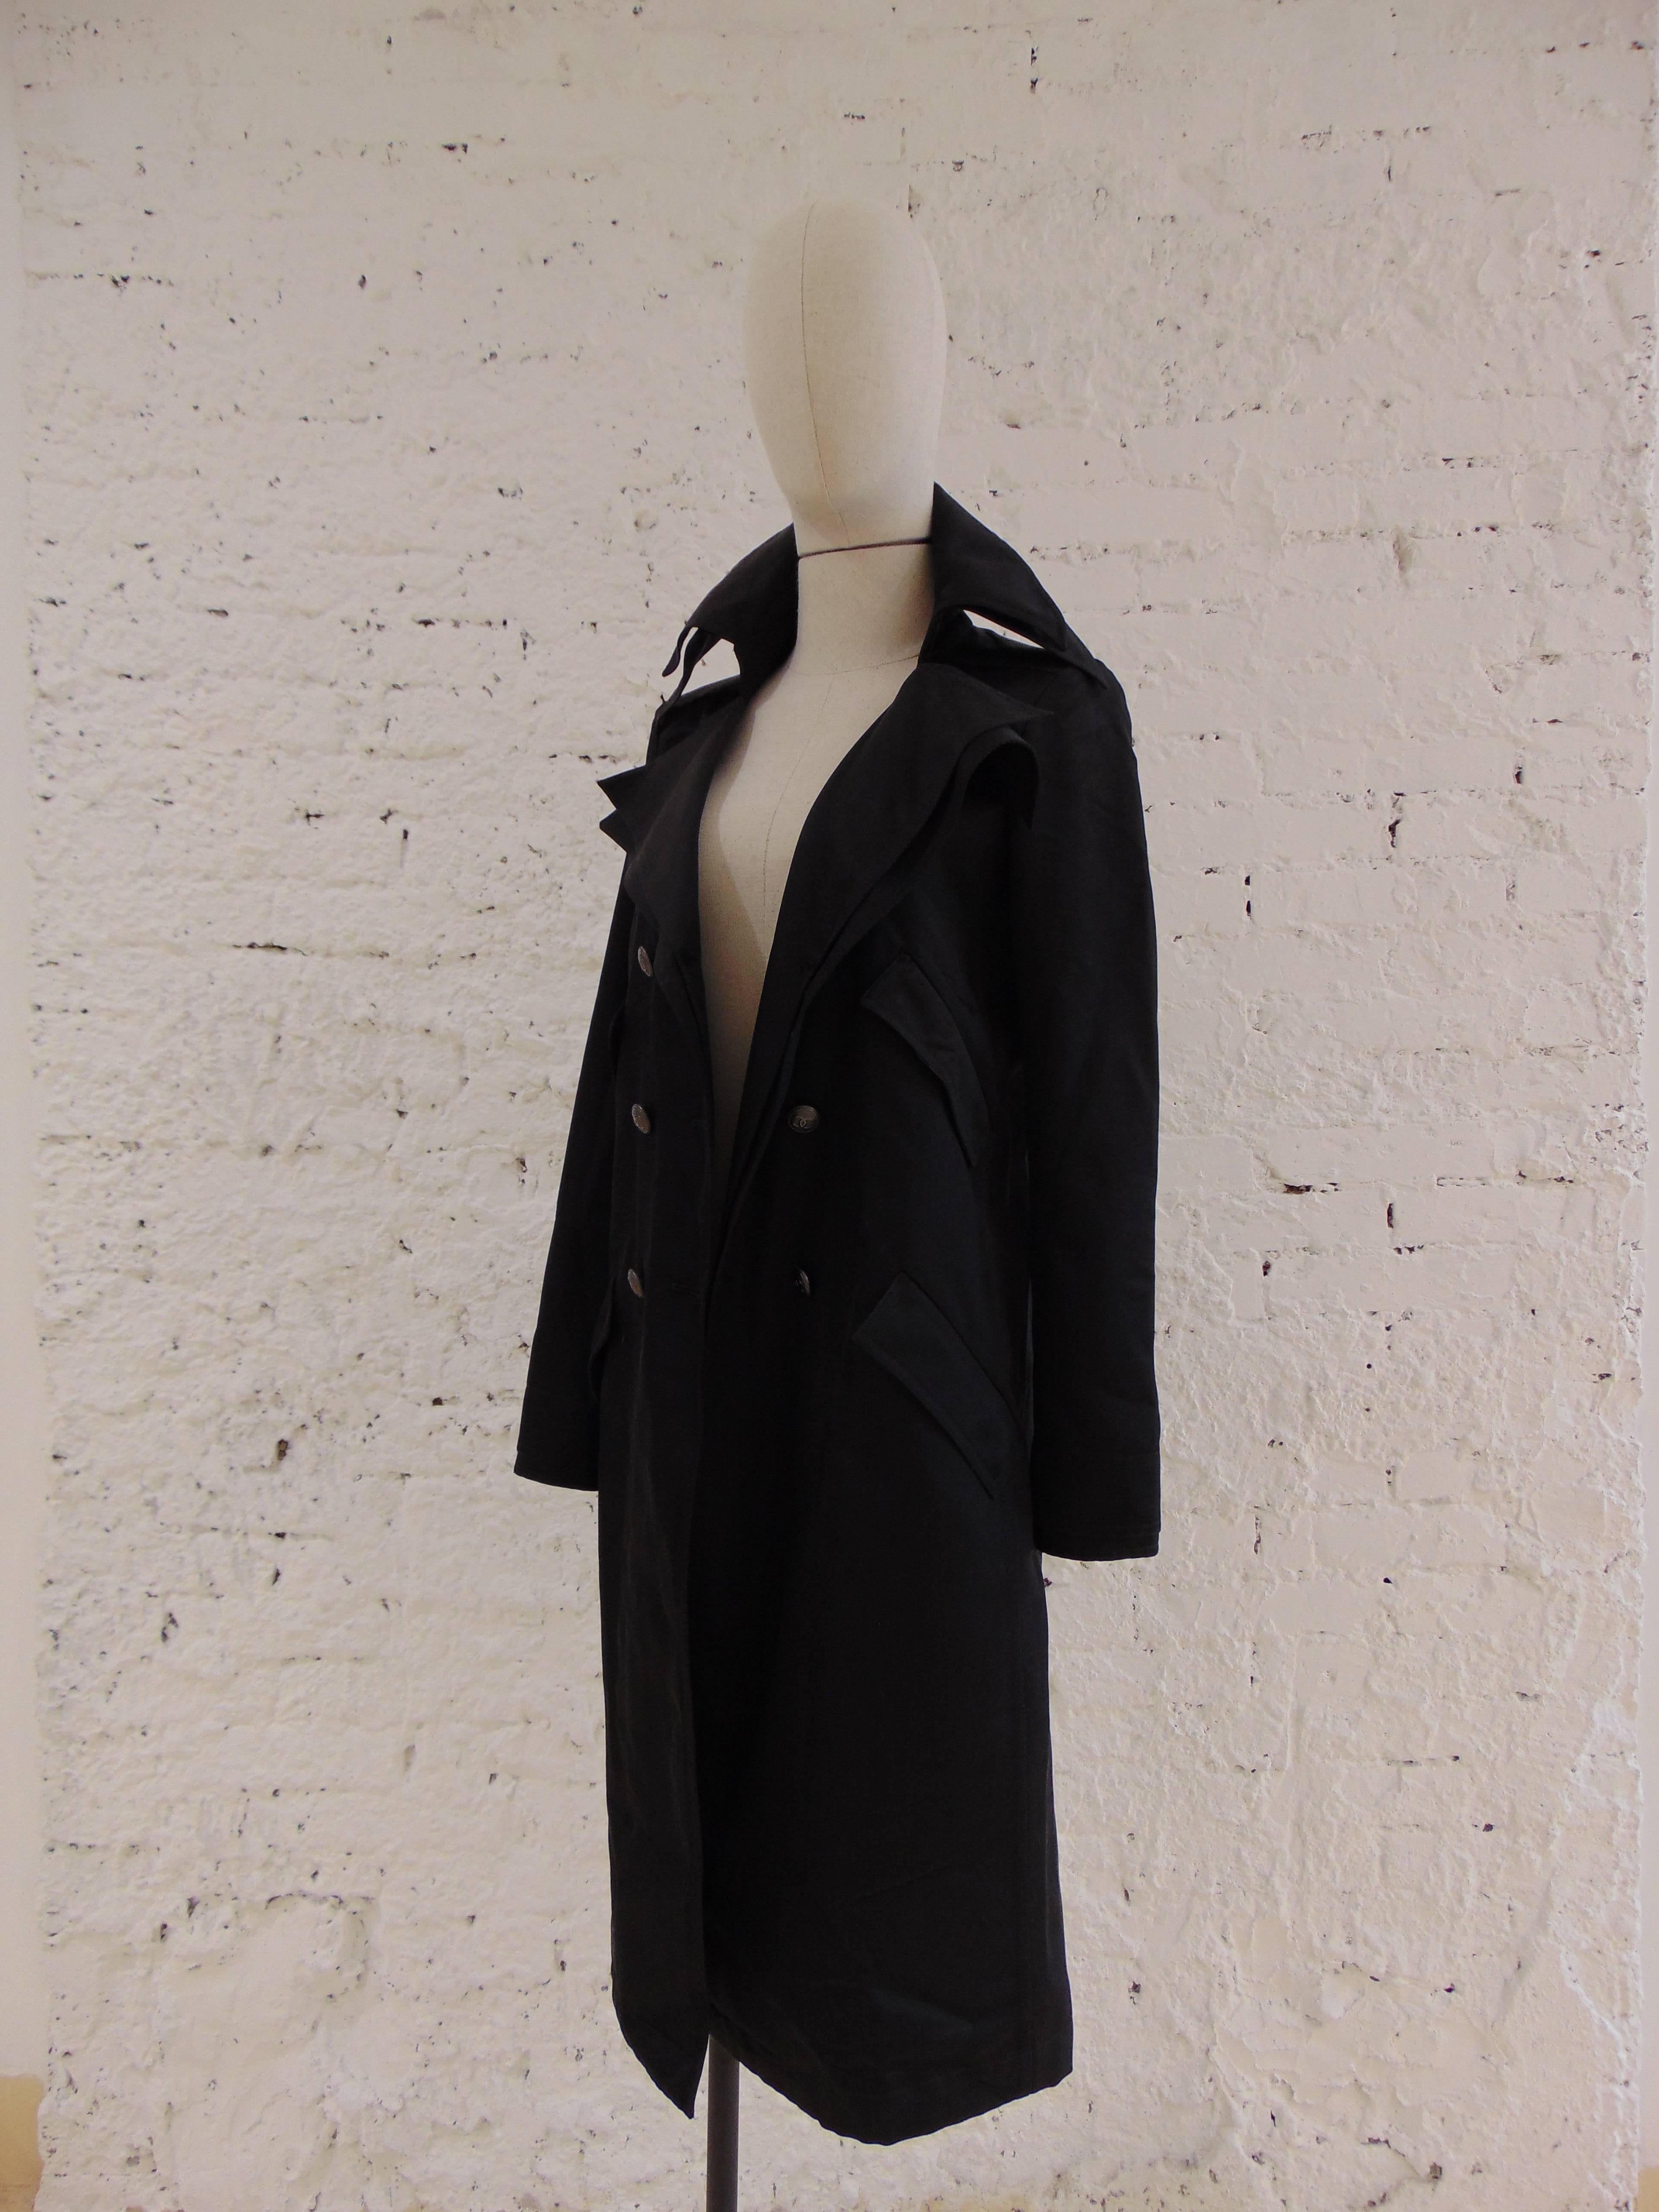 Women's Chanel black coat